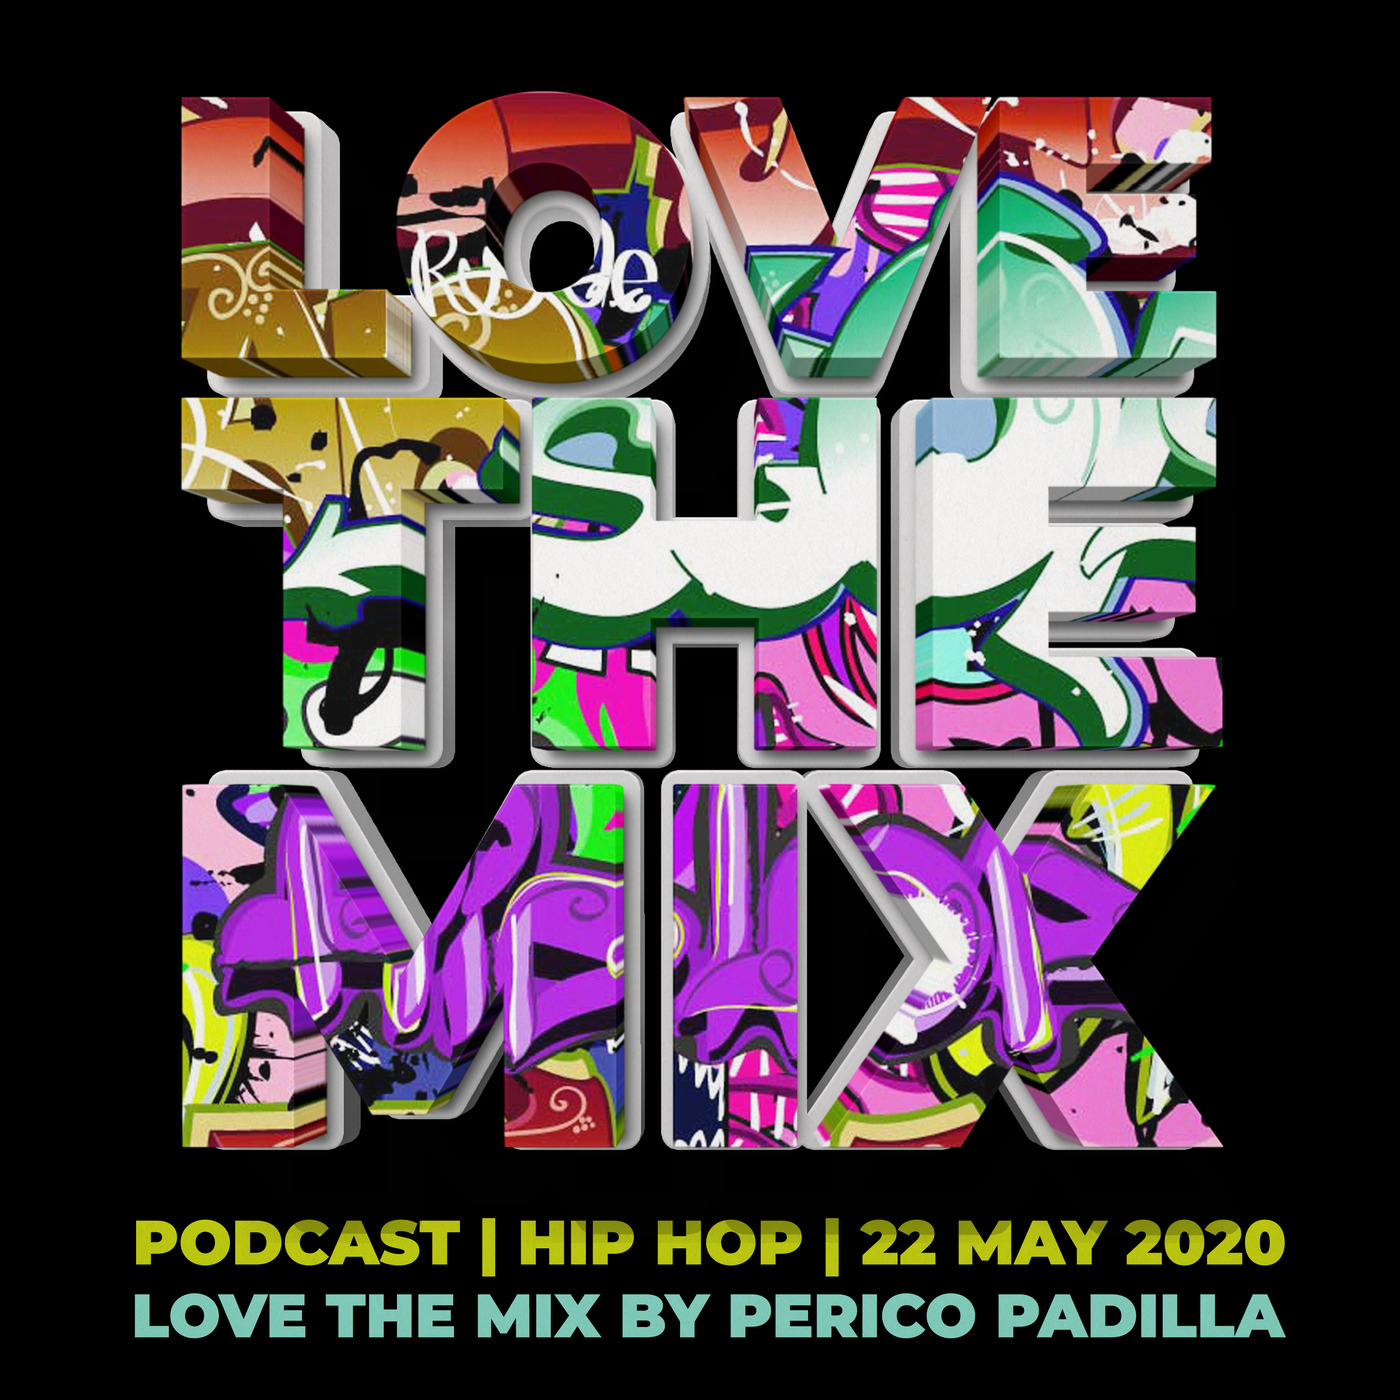 LOVE THE MIX PODCAST | HIP HOP | 22 MAY 2020 By Perico Padilla